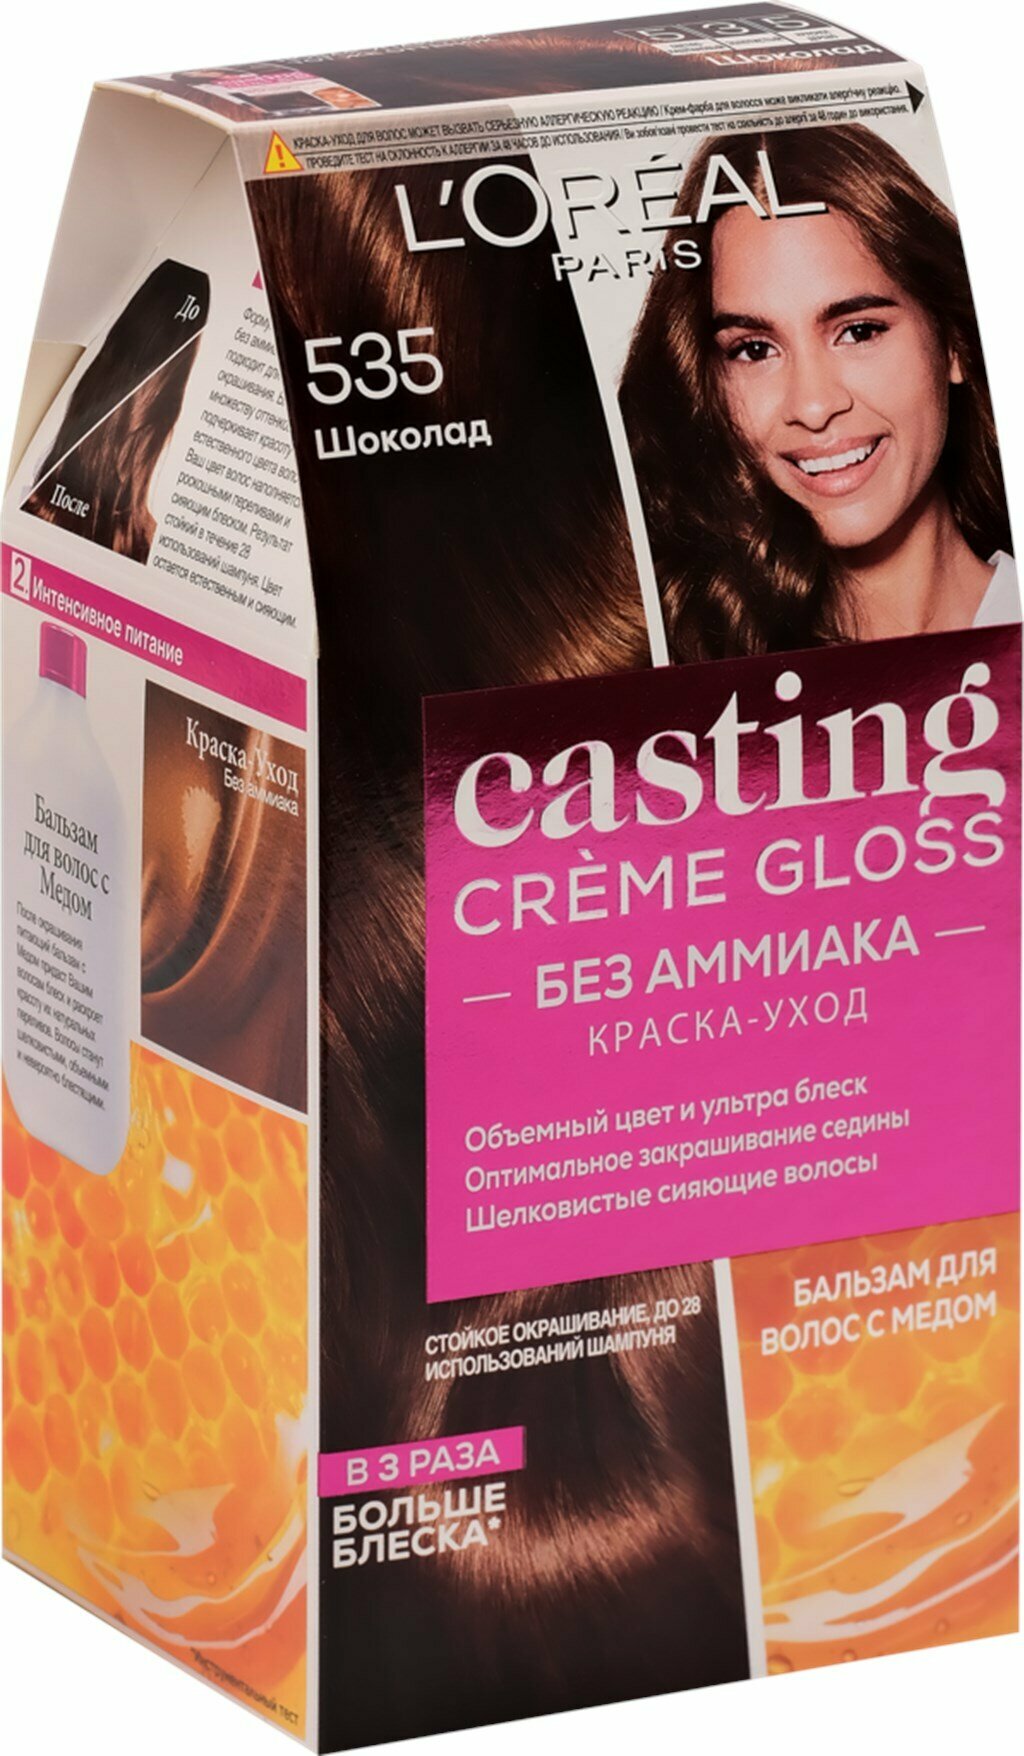 Краска-уход для волос CASTING CREME GLOSS 535 Шоколад, без аммиака, 180мл, Бельгия, 180 мл